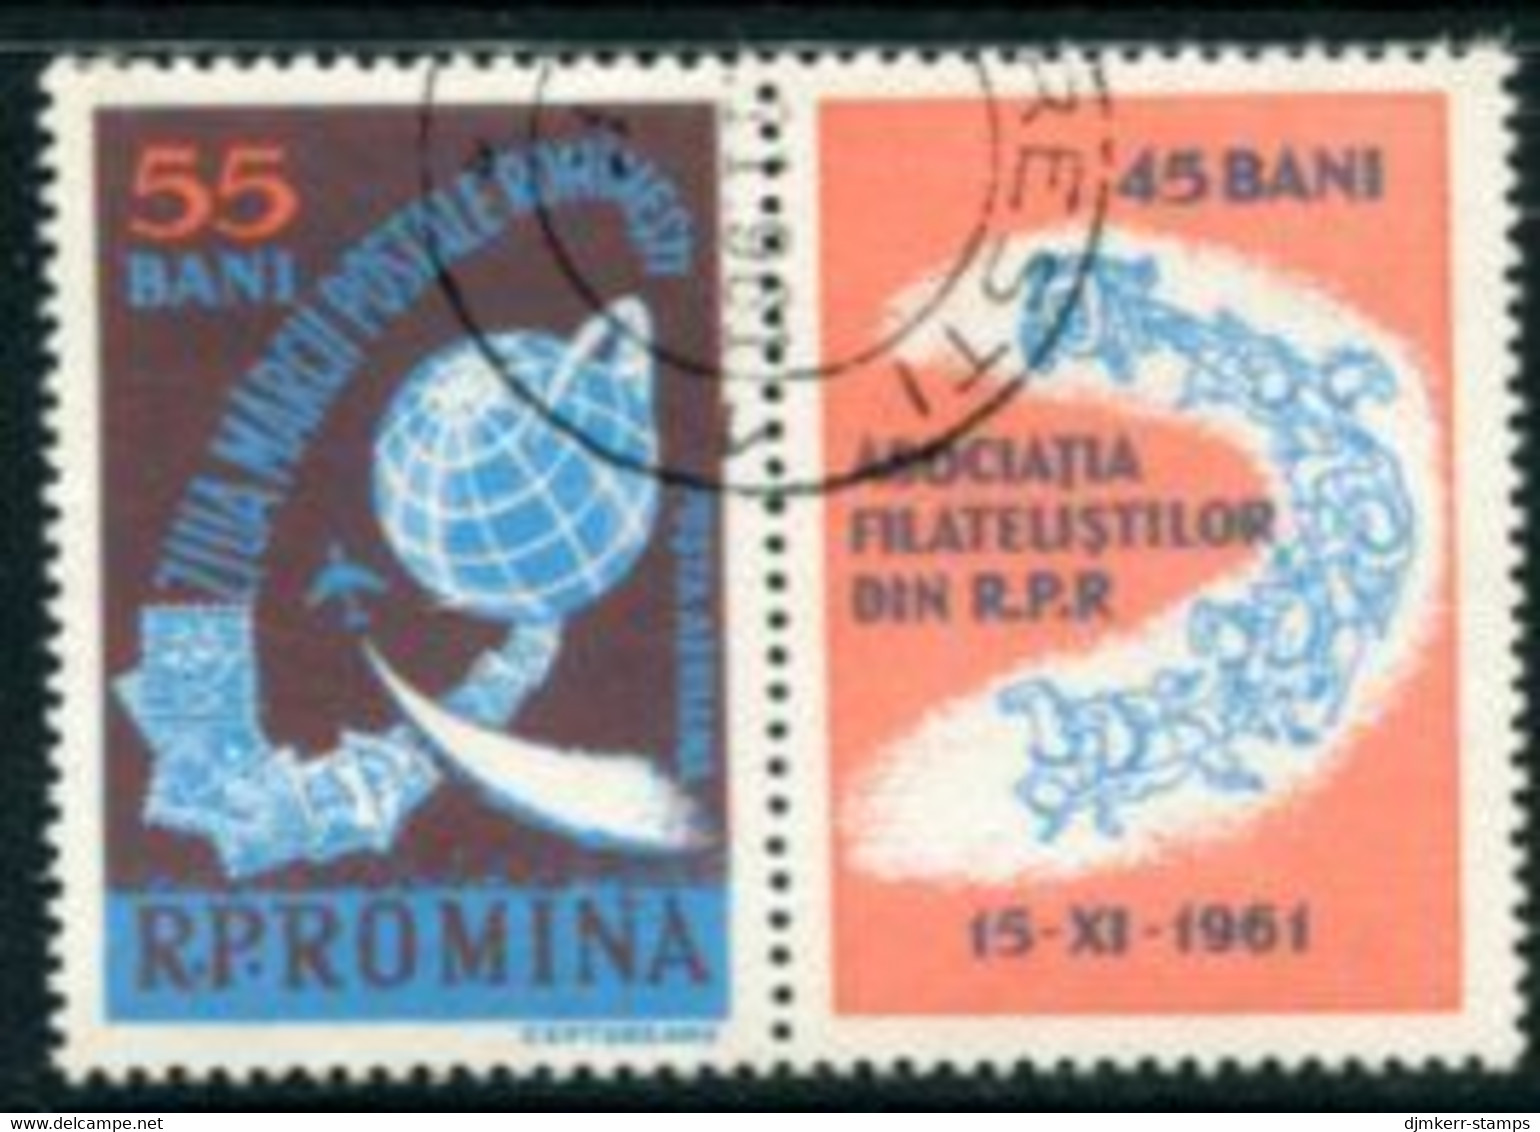 ROMANIA 1961 Stamp Day Used.  Michel 2009 - Usado